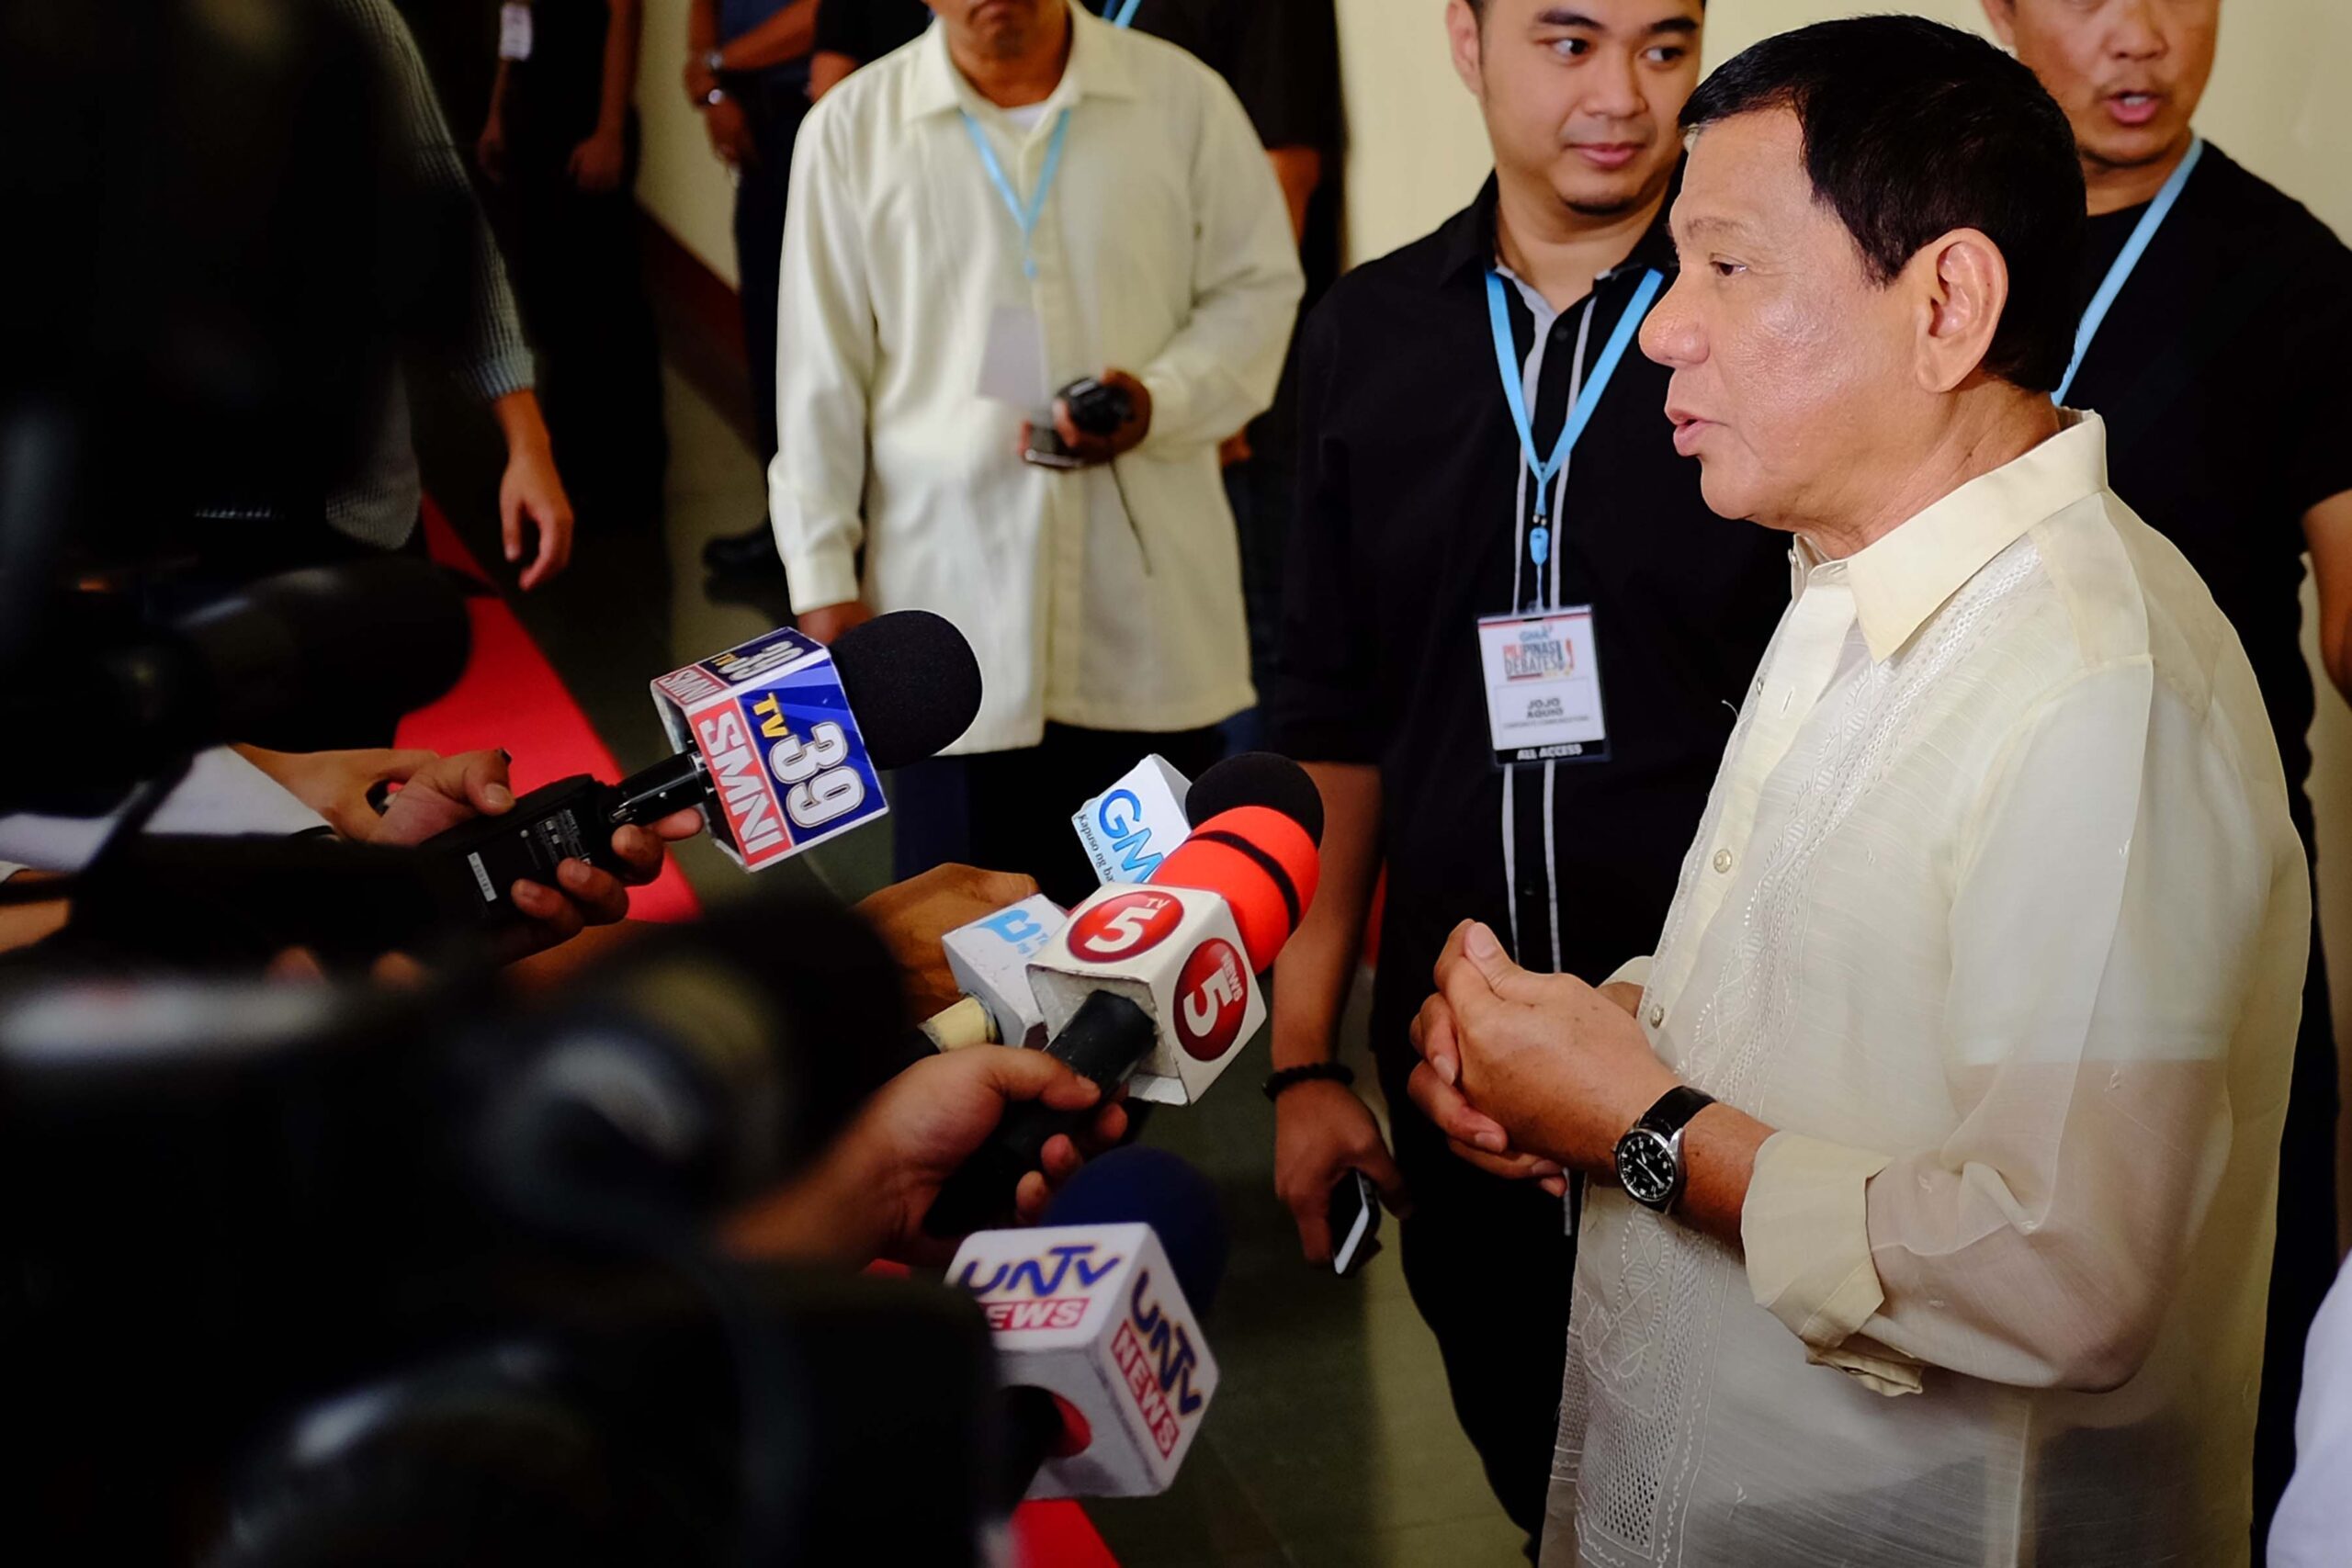 On social media, Duterte wins Round 1 of the debate